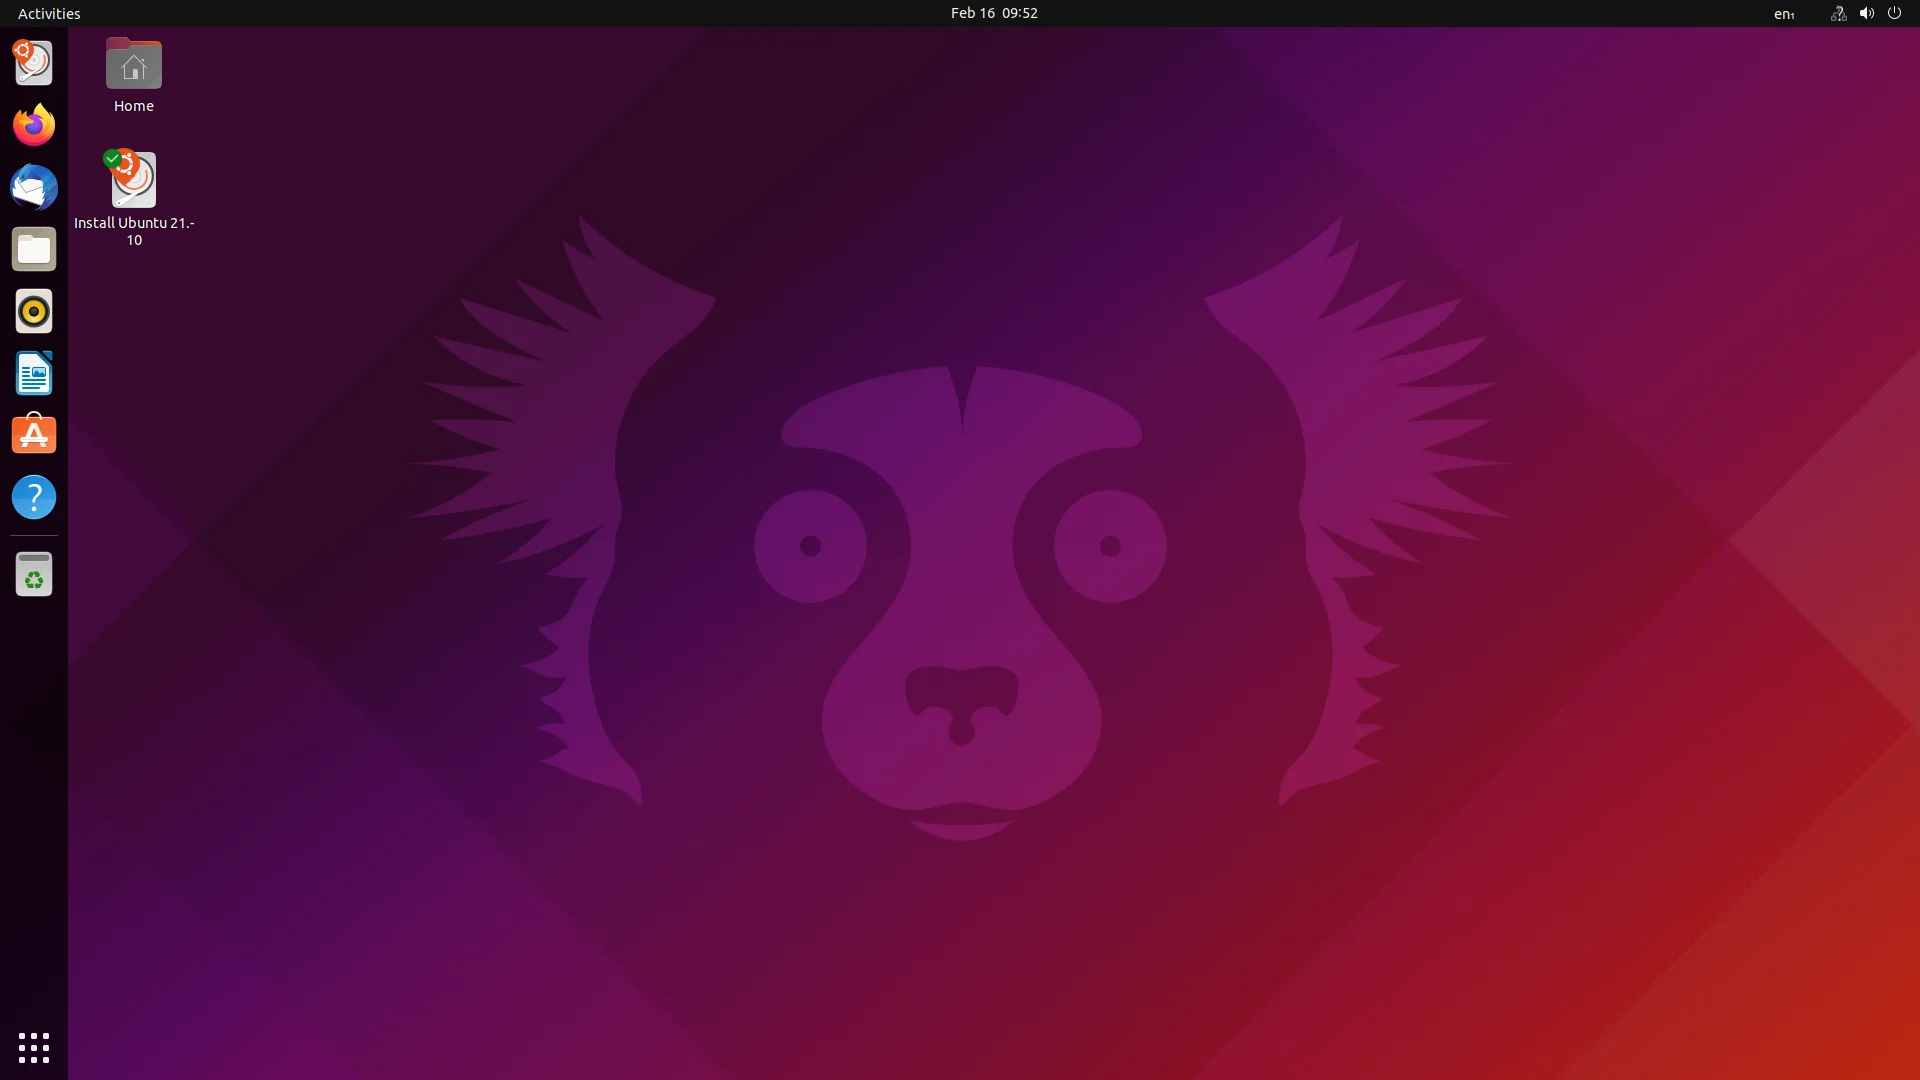 Ubuntu 21.10 Live